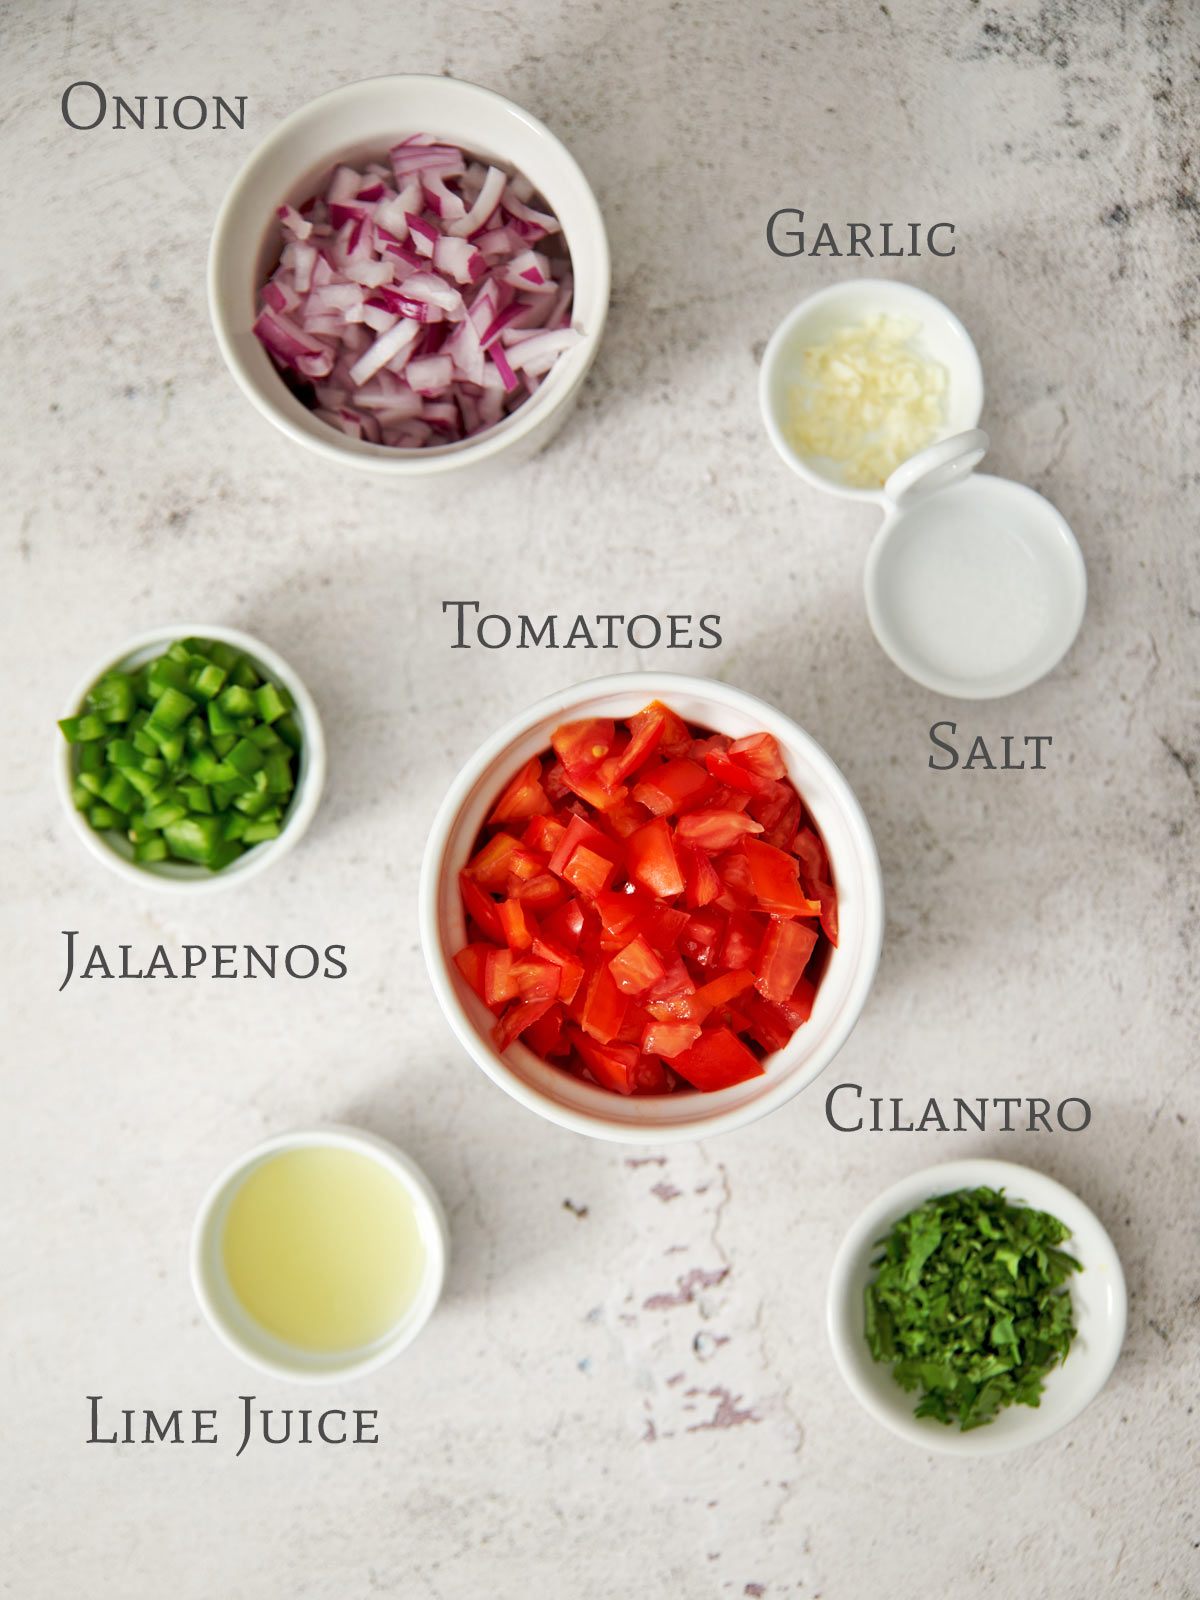 All the ingredients for Chipotle Mild Salsa Recipe for Easy Pico de Gallo.